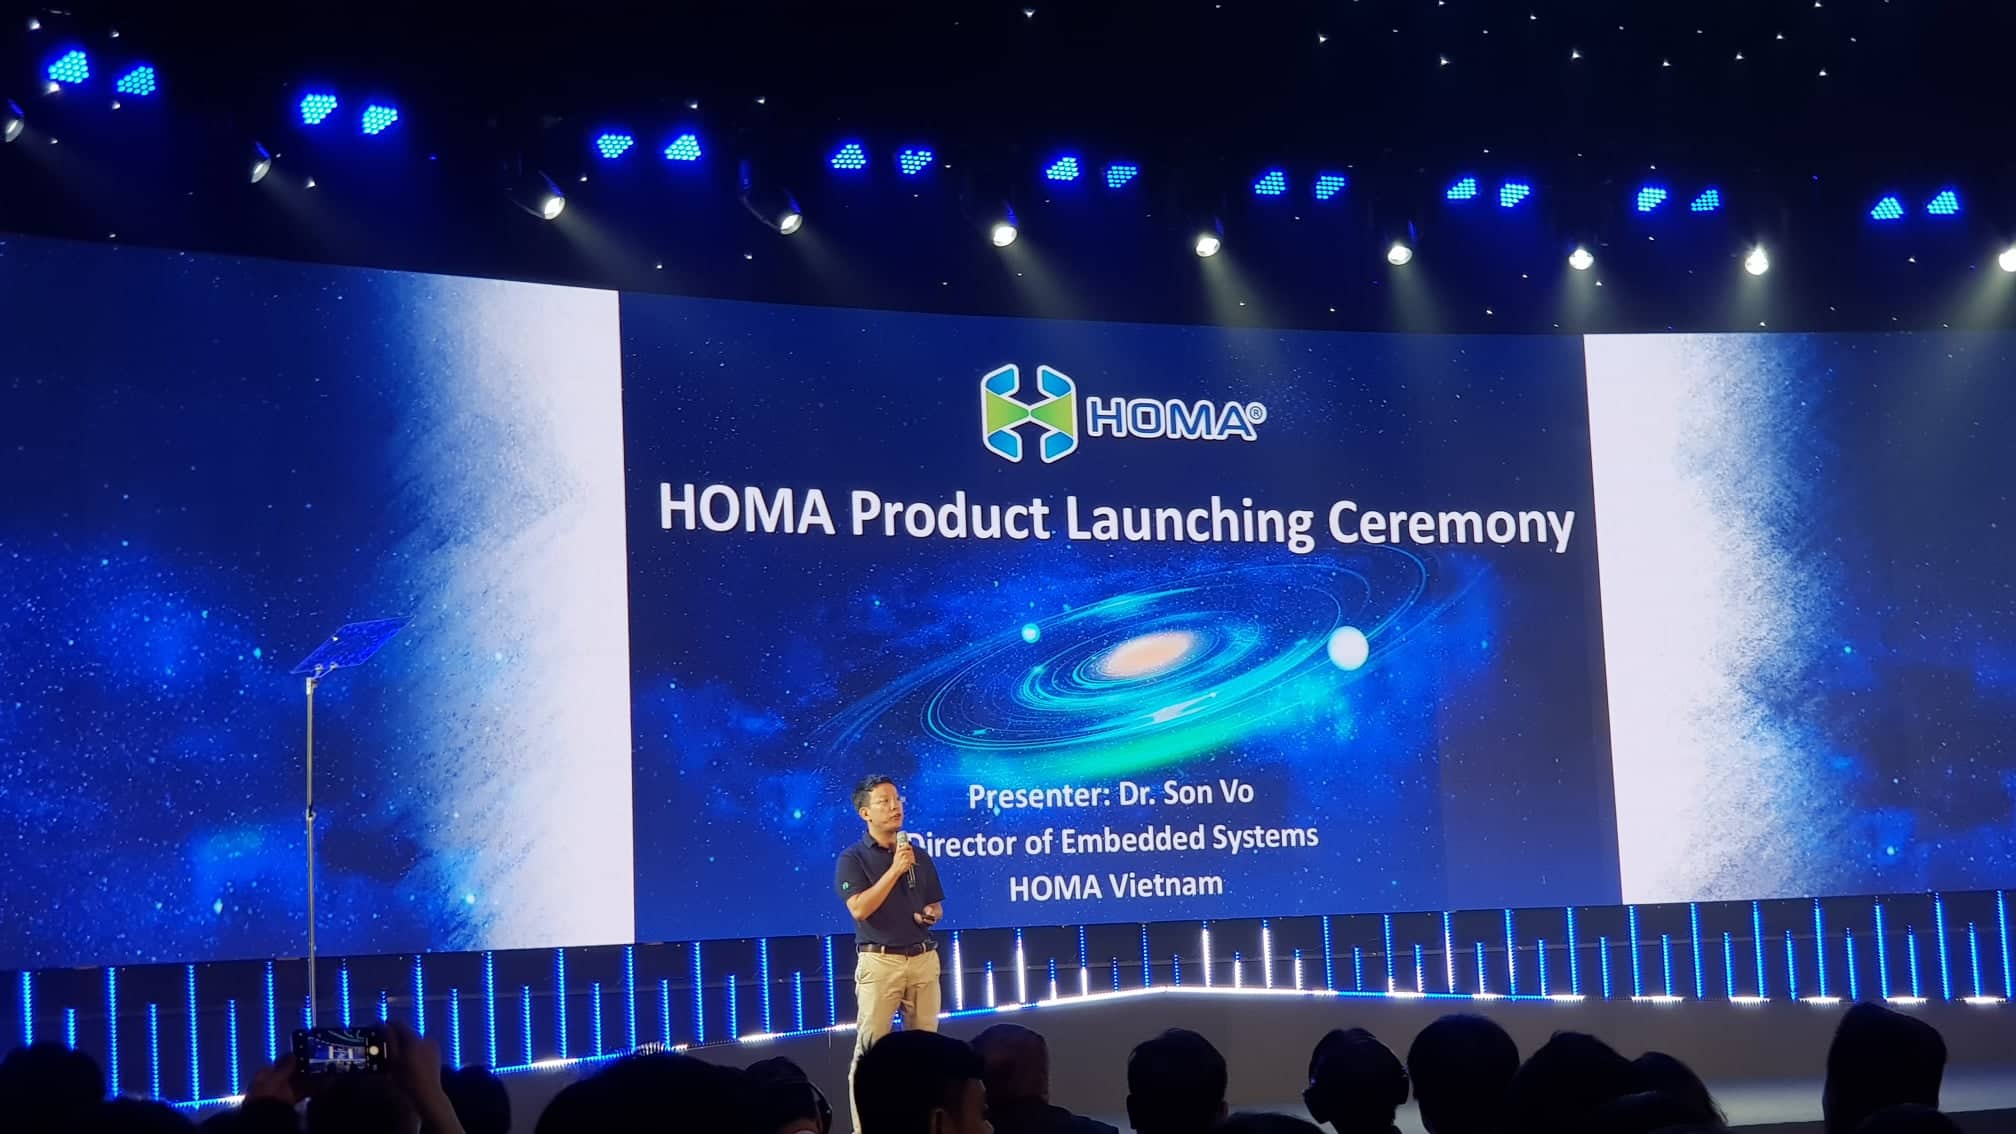 Homa product launching ceremony